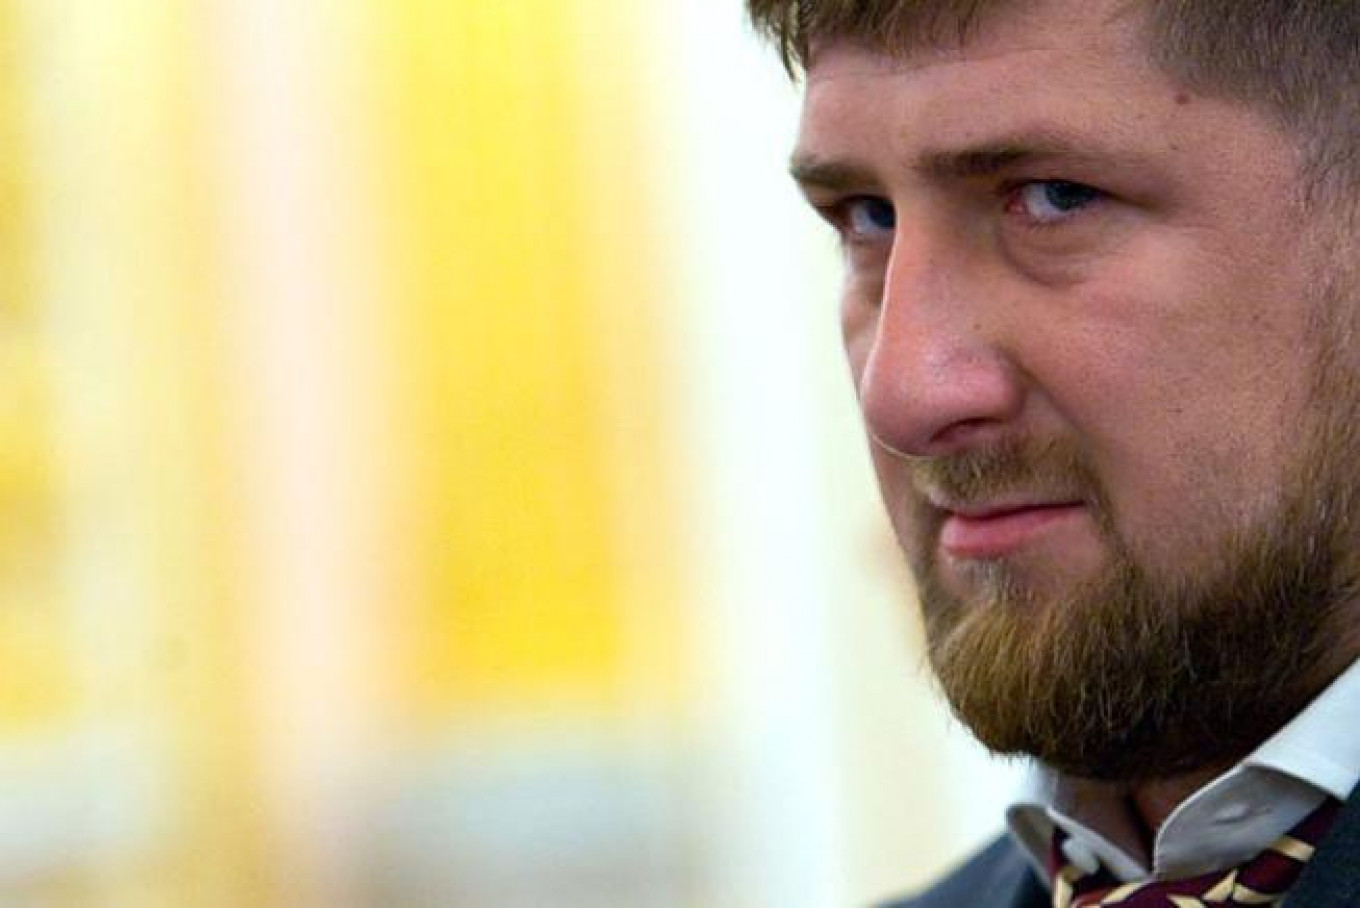 Senate condemns persecution of gay men in chechnya